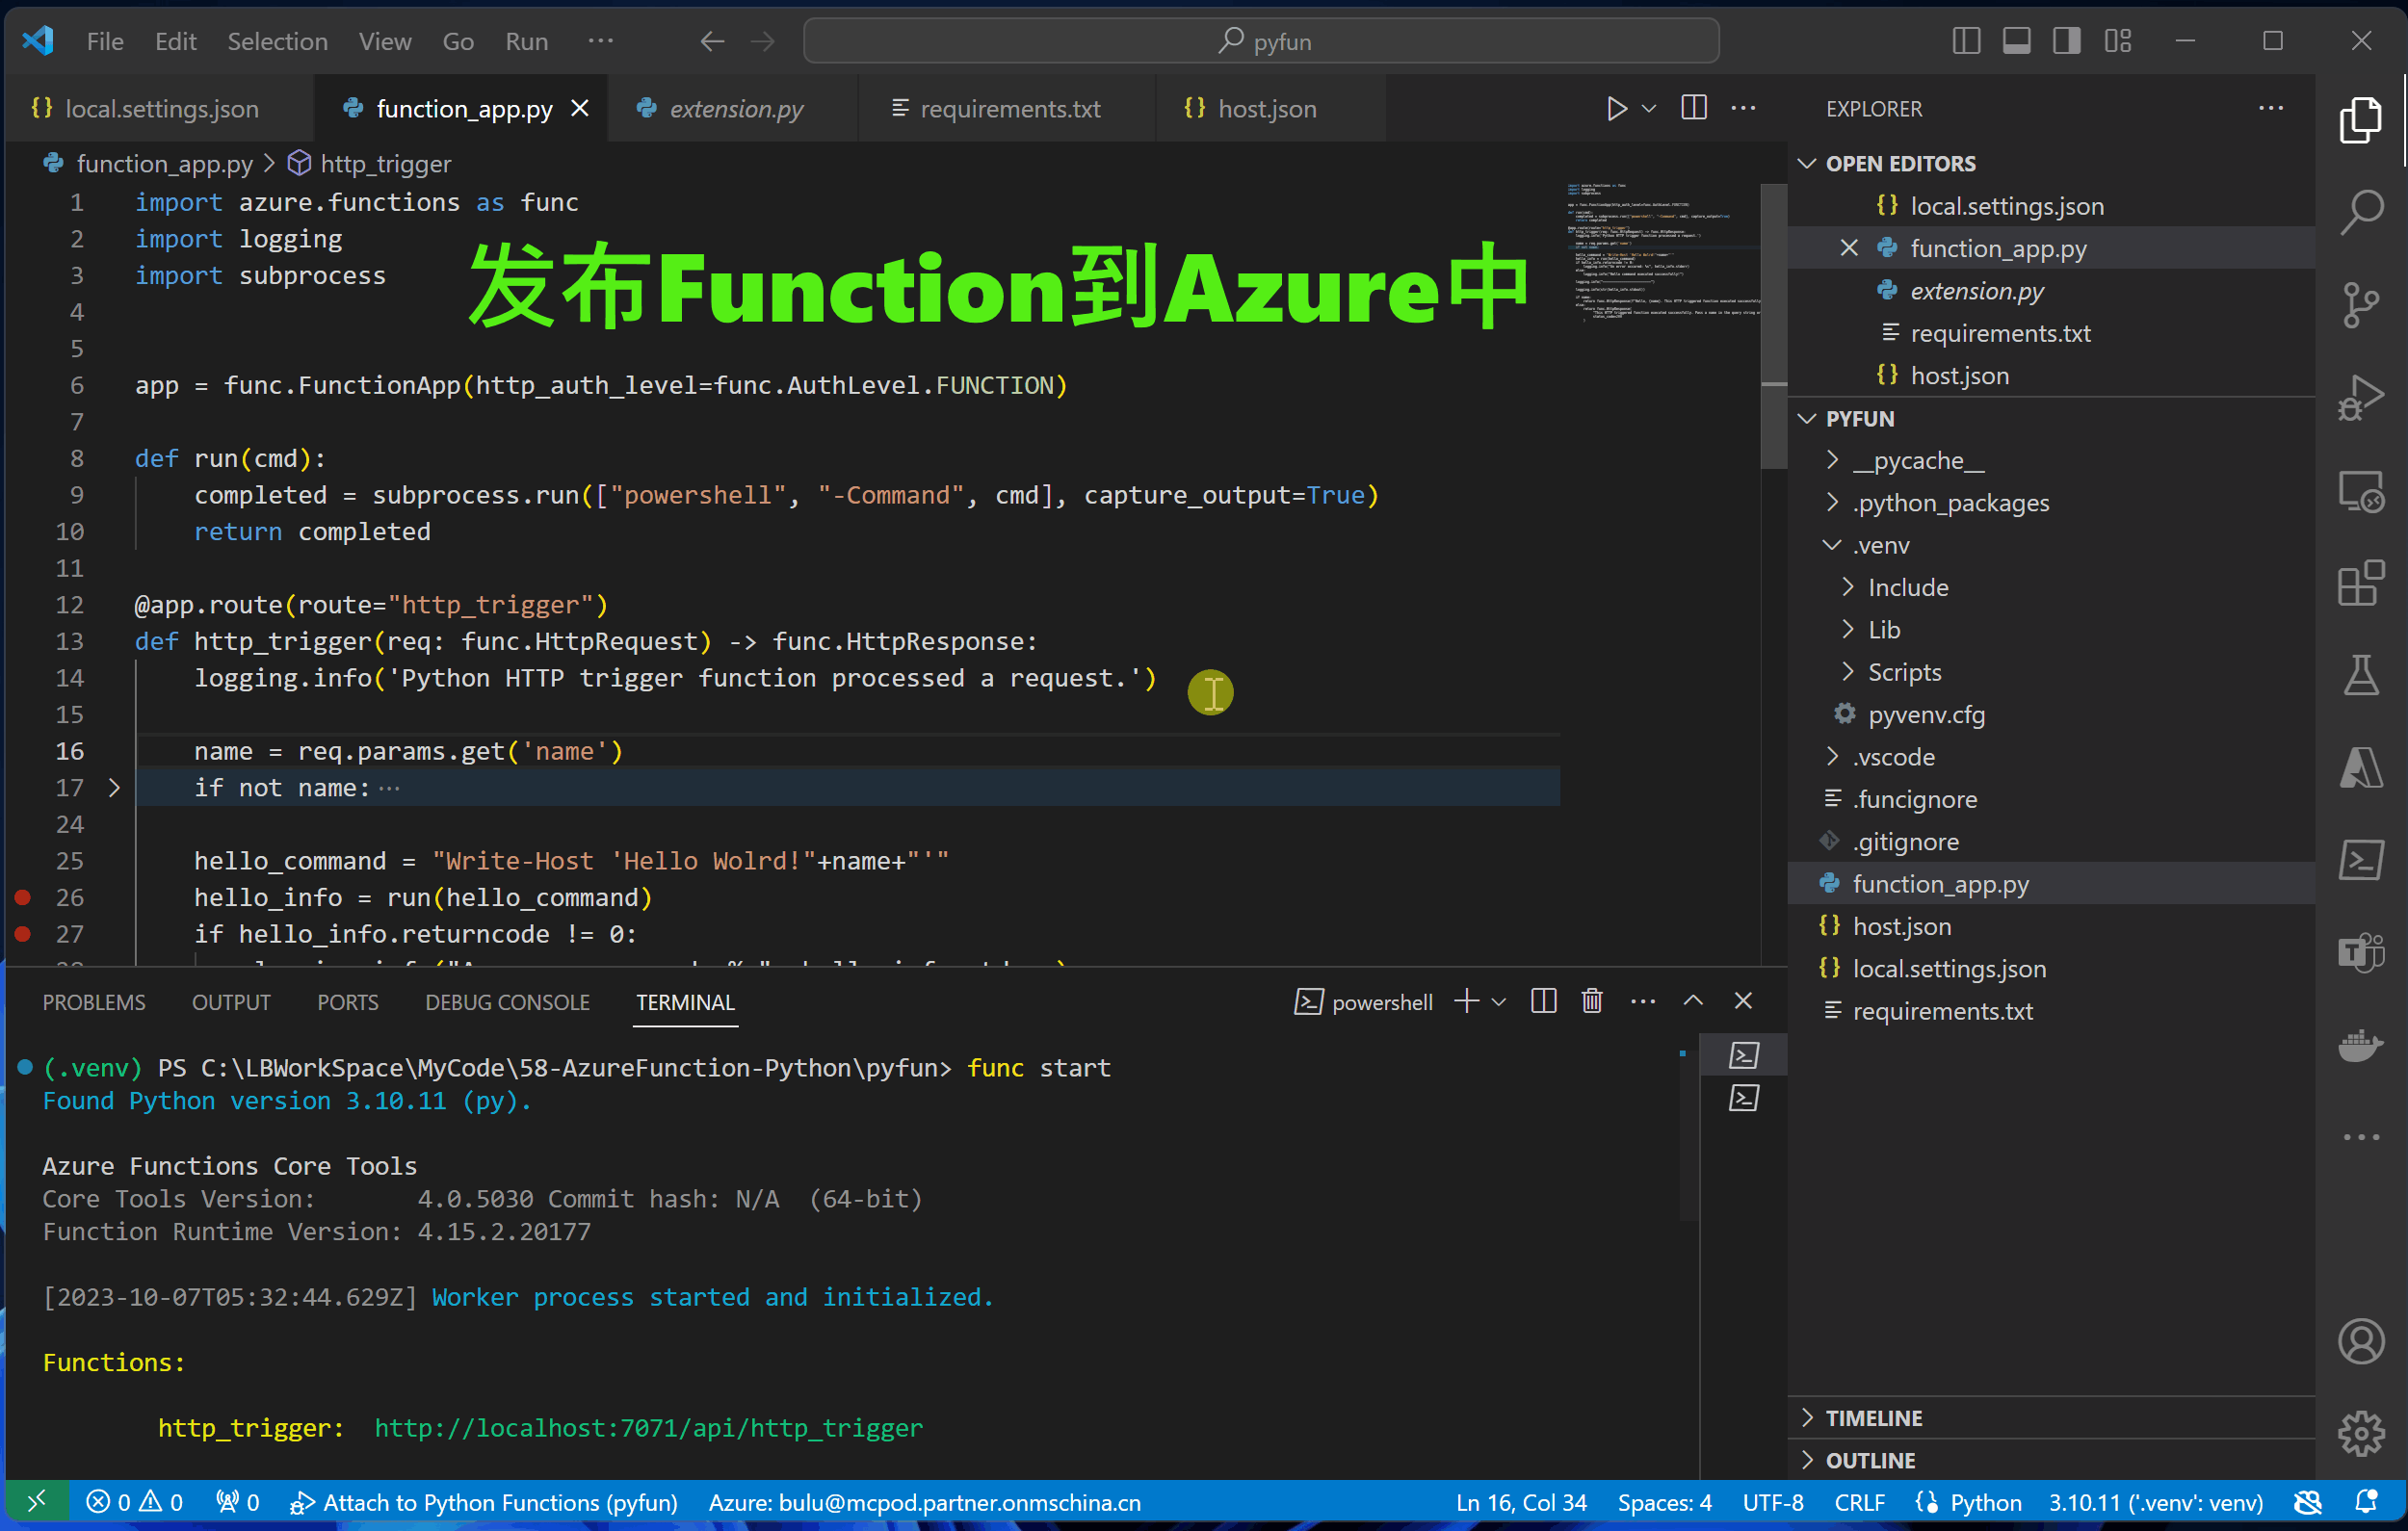 【Azure Function App】Python Function调用Powershell脚本在Azure上执行失败的案例 _python_02